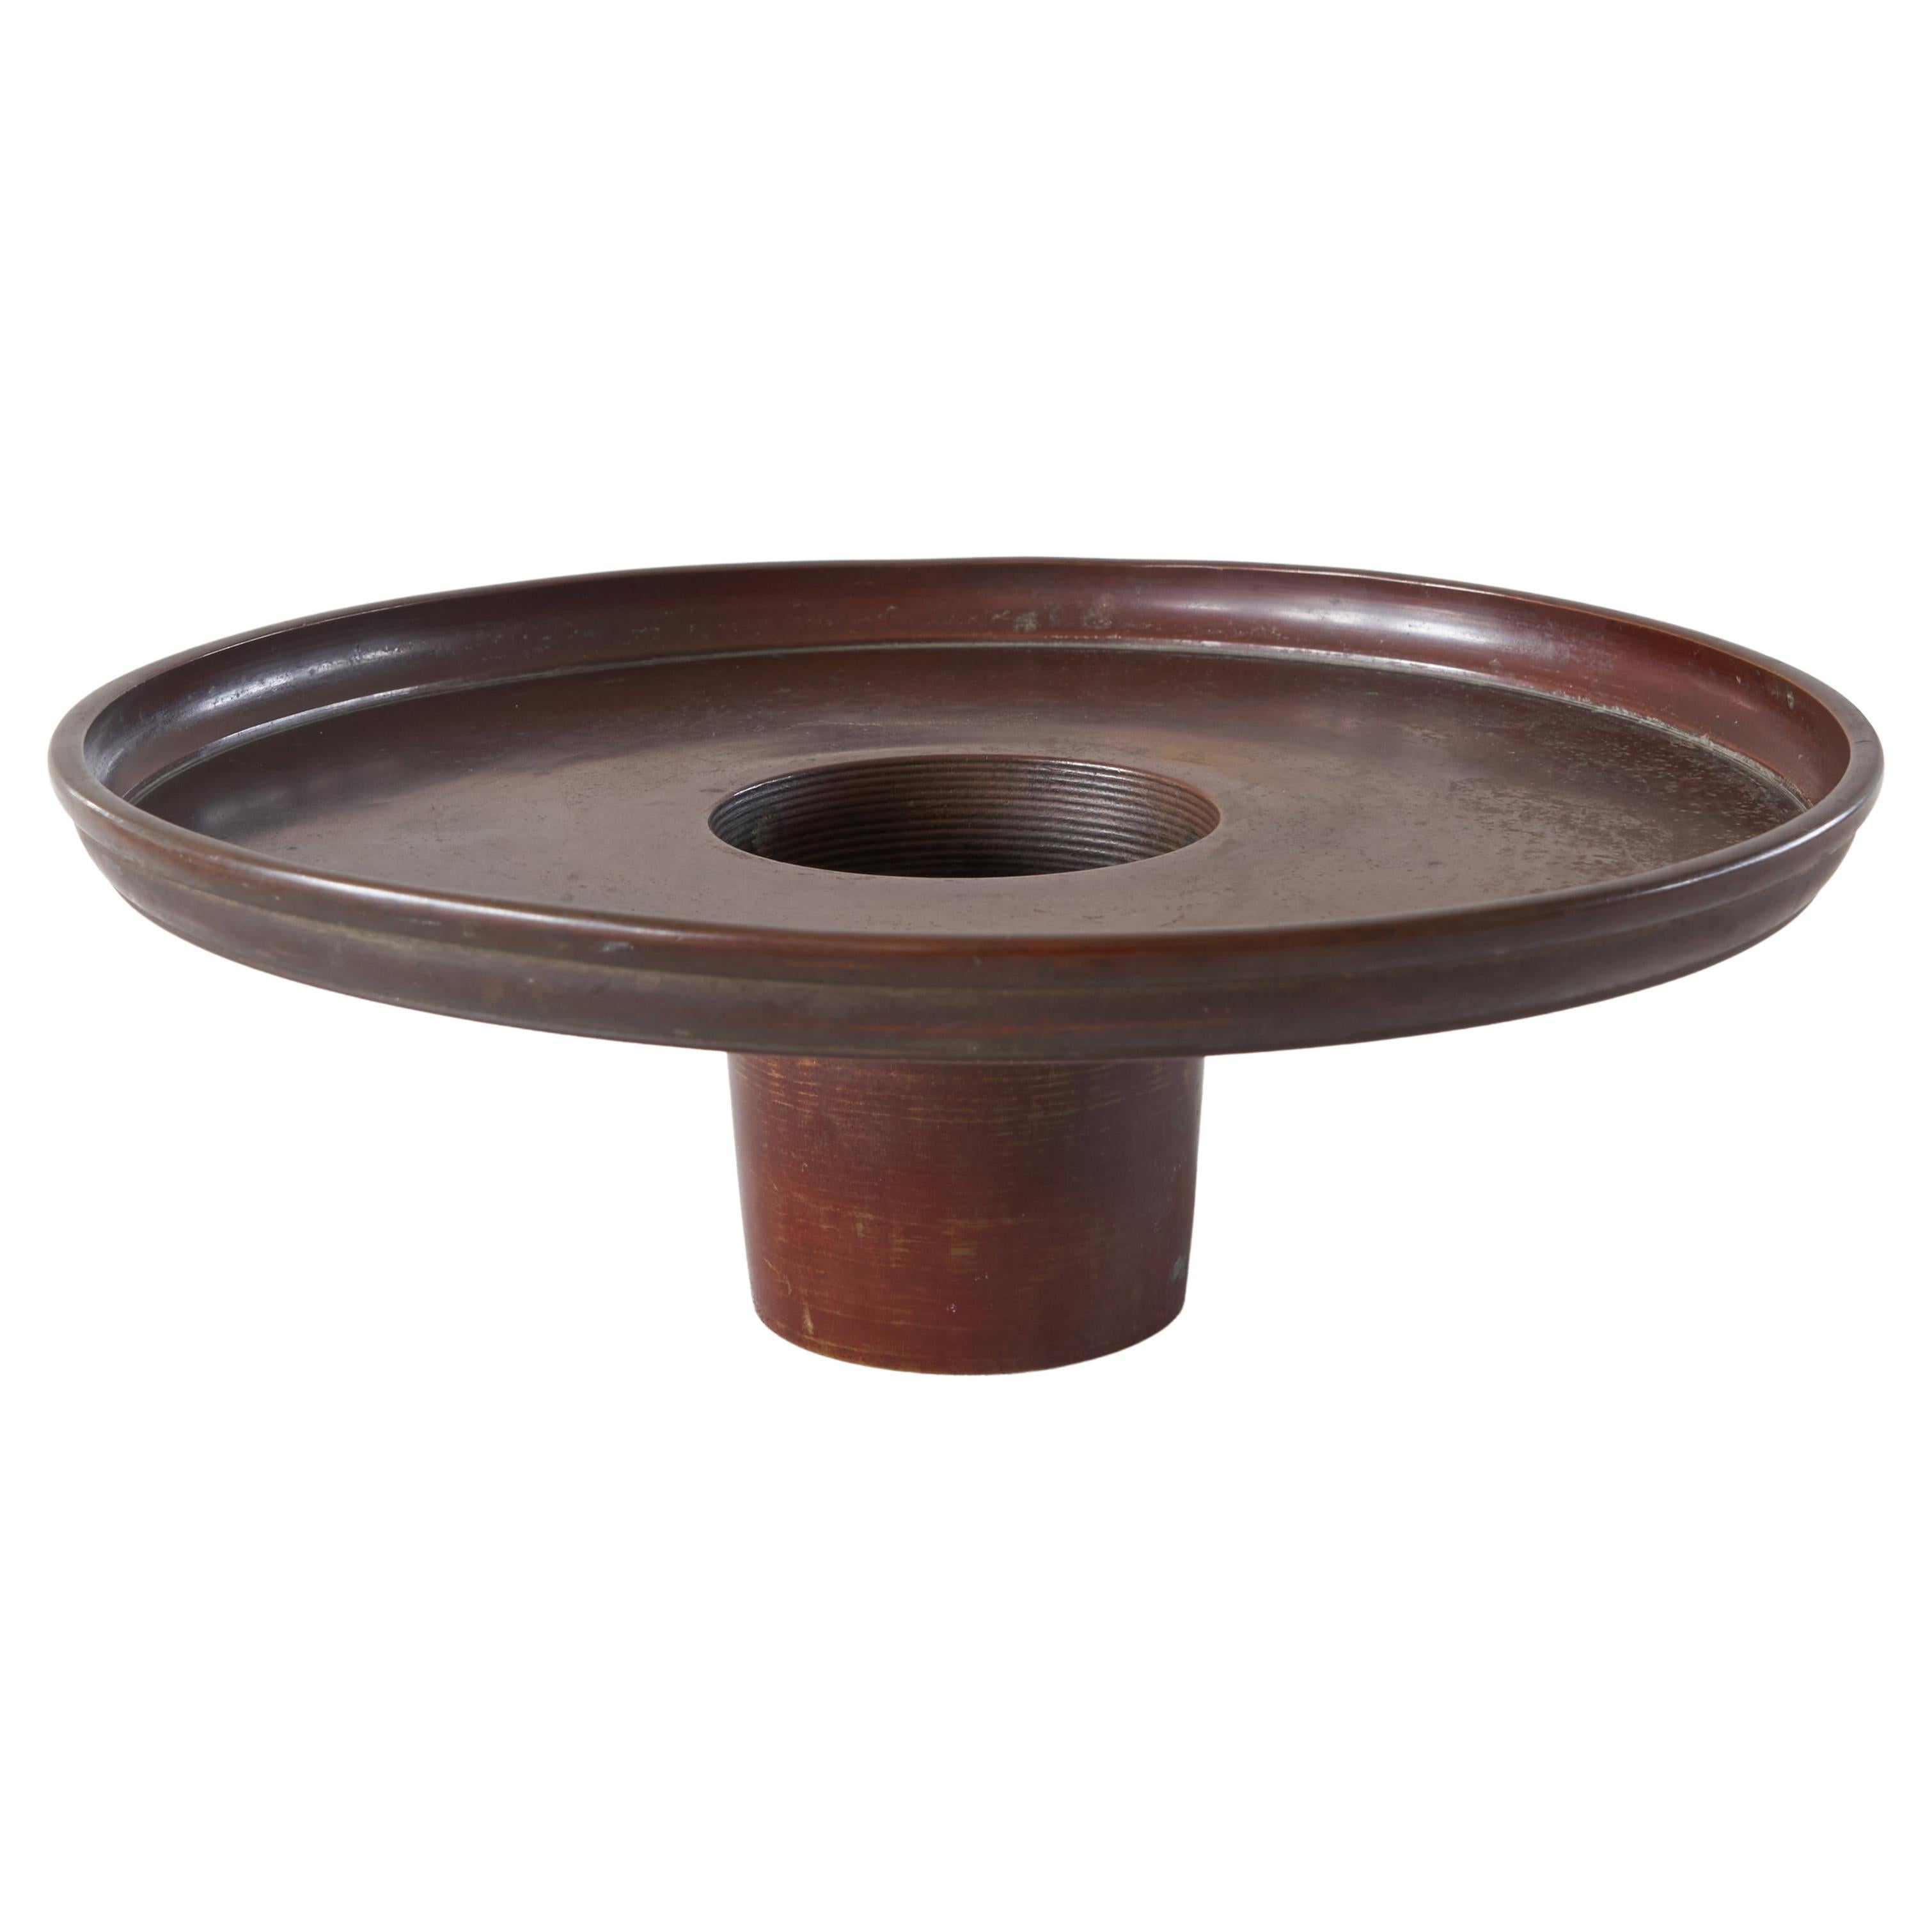 Japanese Modernist Bowl in Bronze from the Shōwa Era